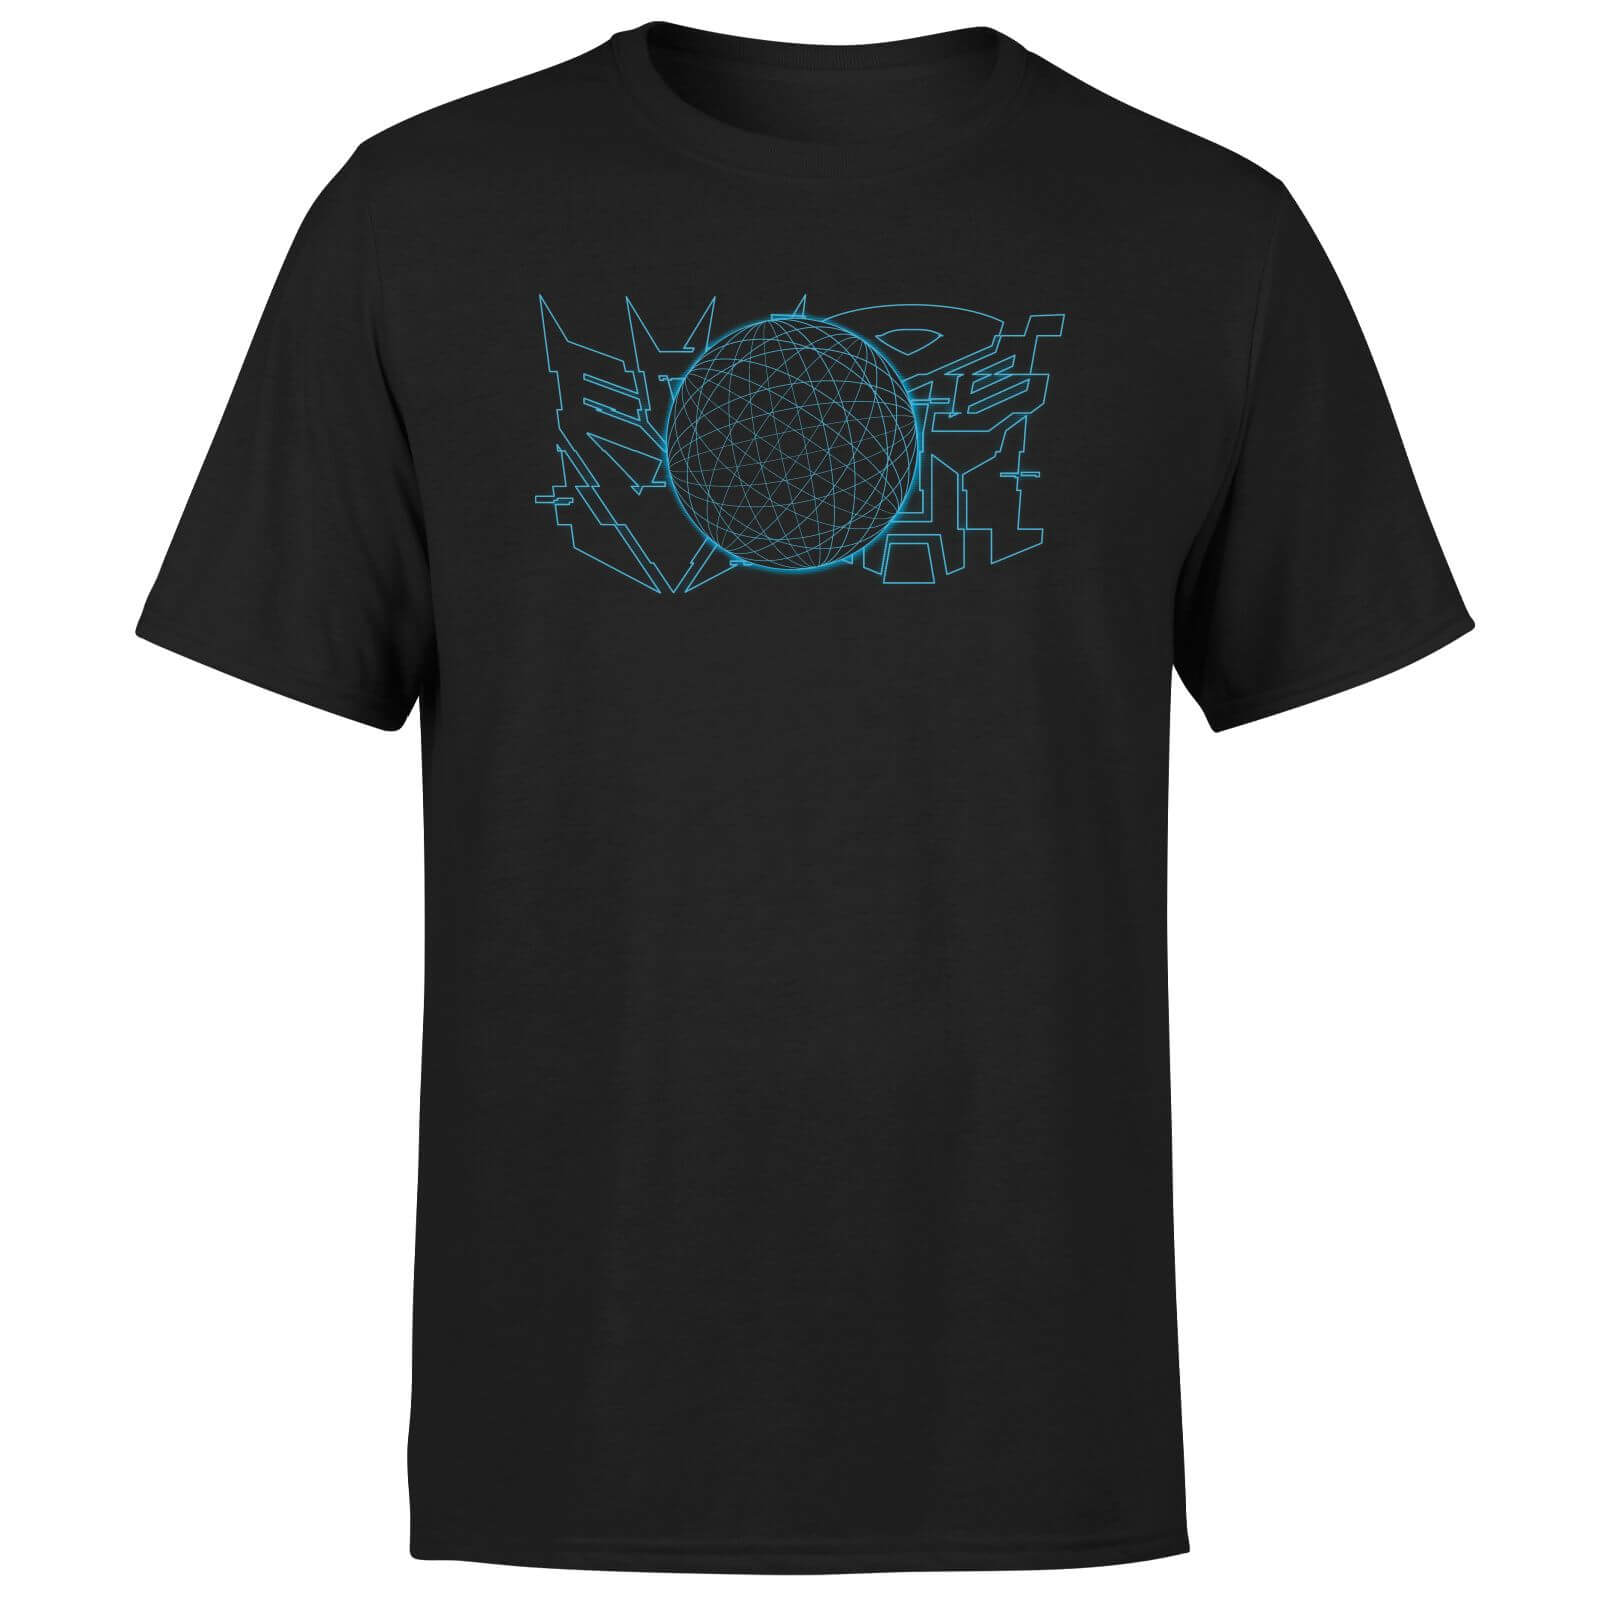 Transformers War For Cybertron Unisex T-Shirt - Black - S - Black